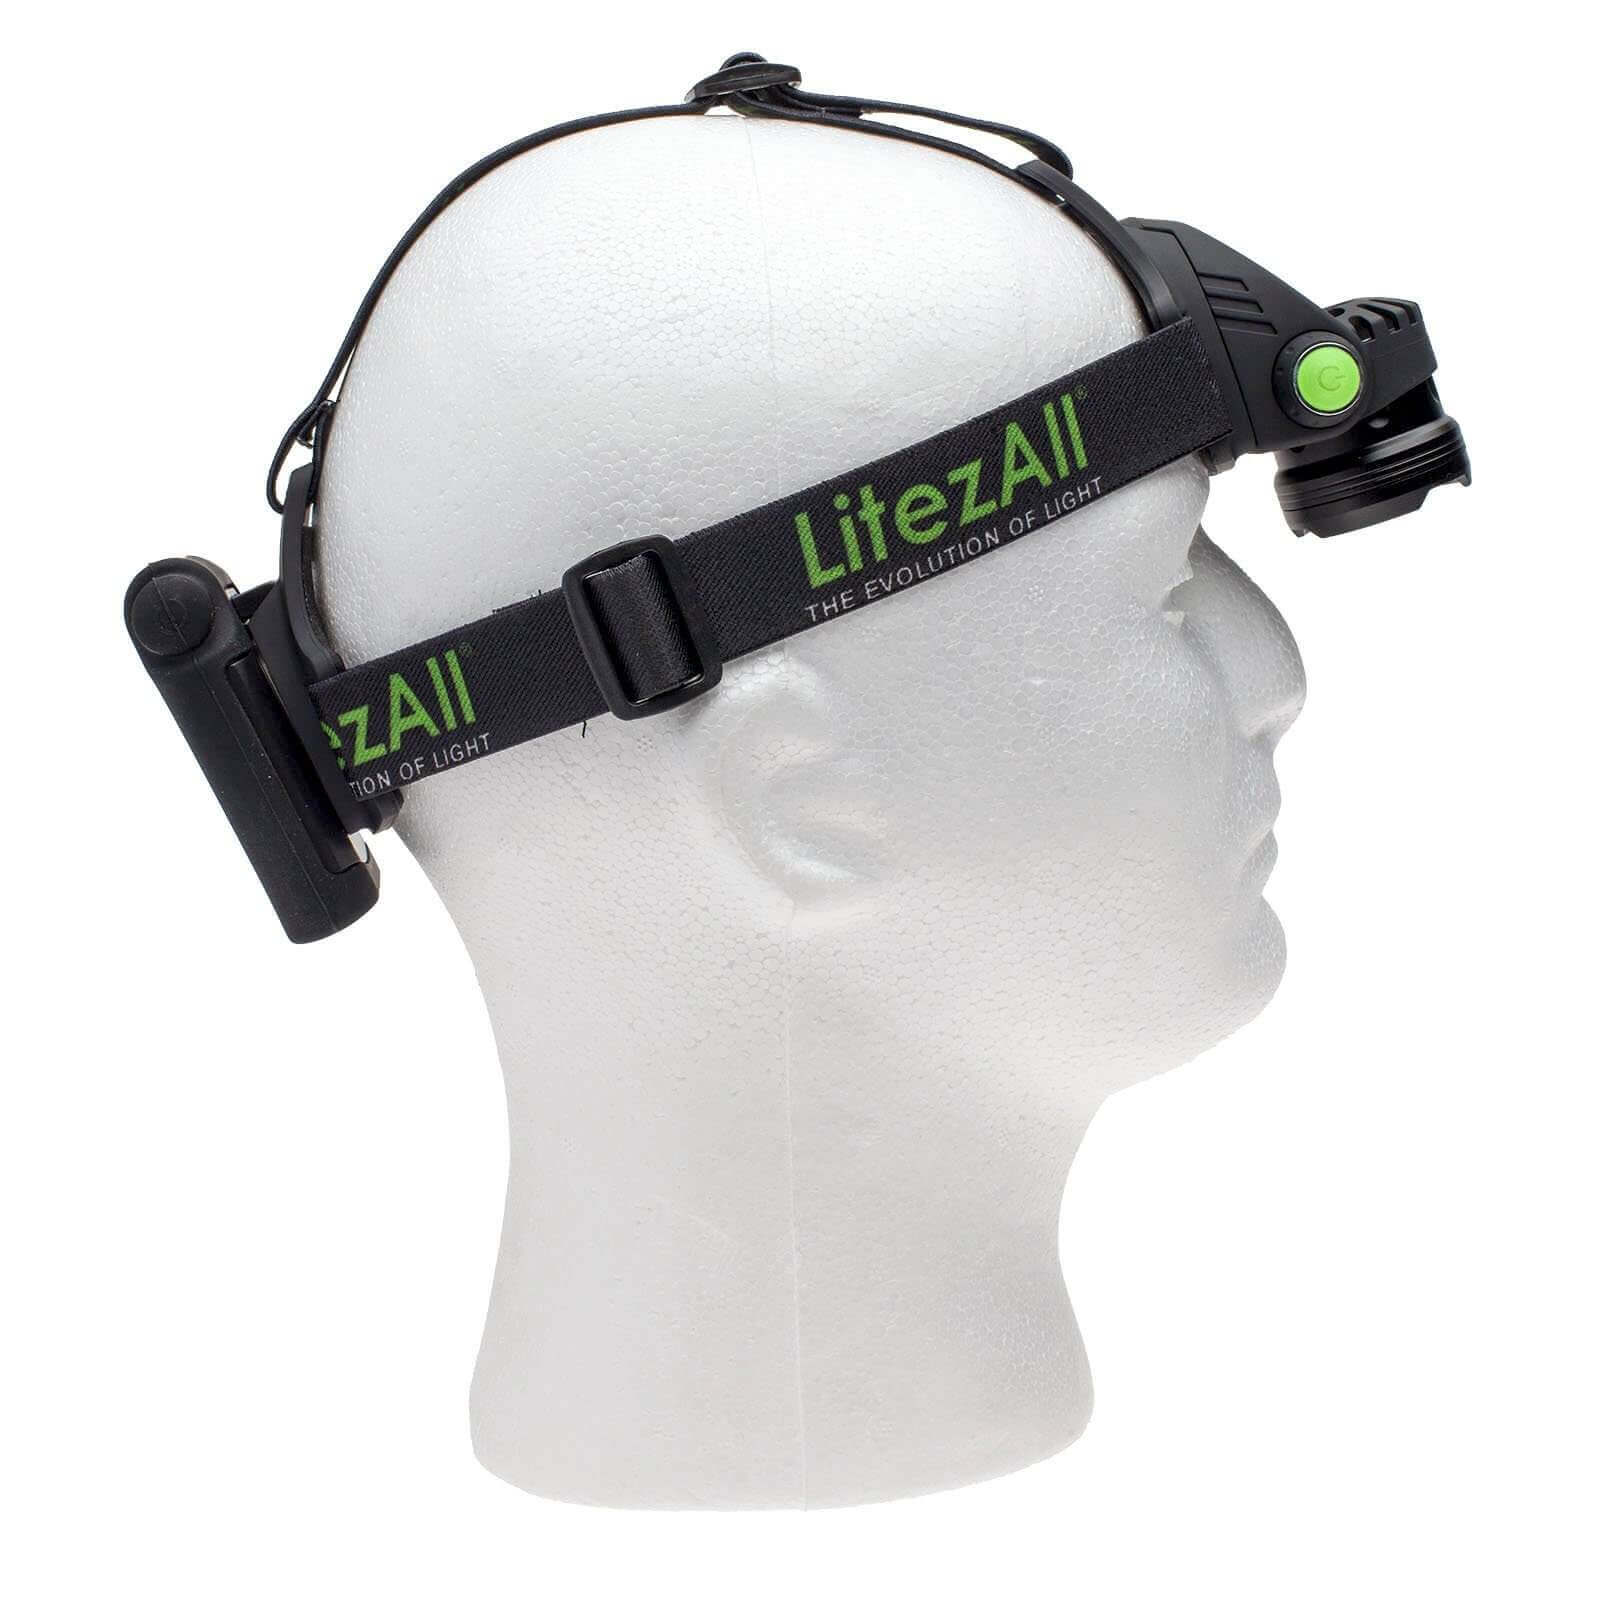 LitezAll 800 Lumen Headlamp Worklight - LitezAll